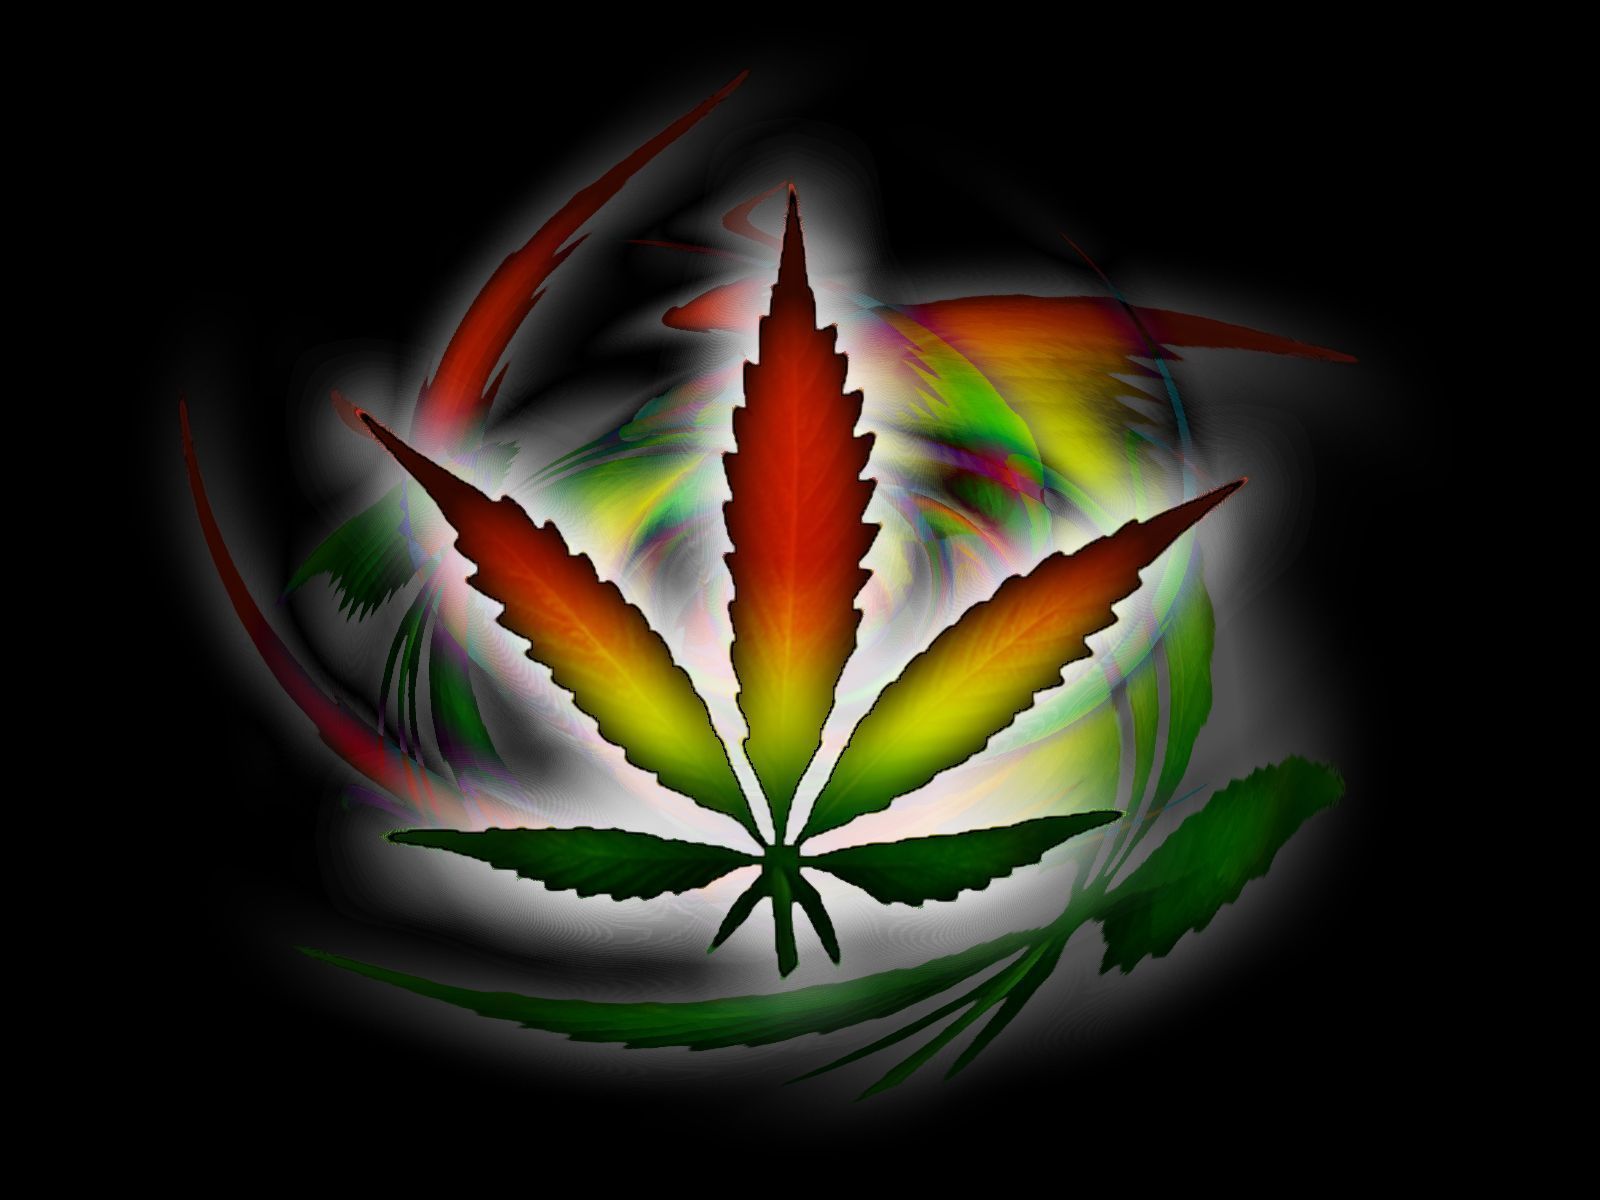 New Marijuana Wallpaper